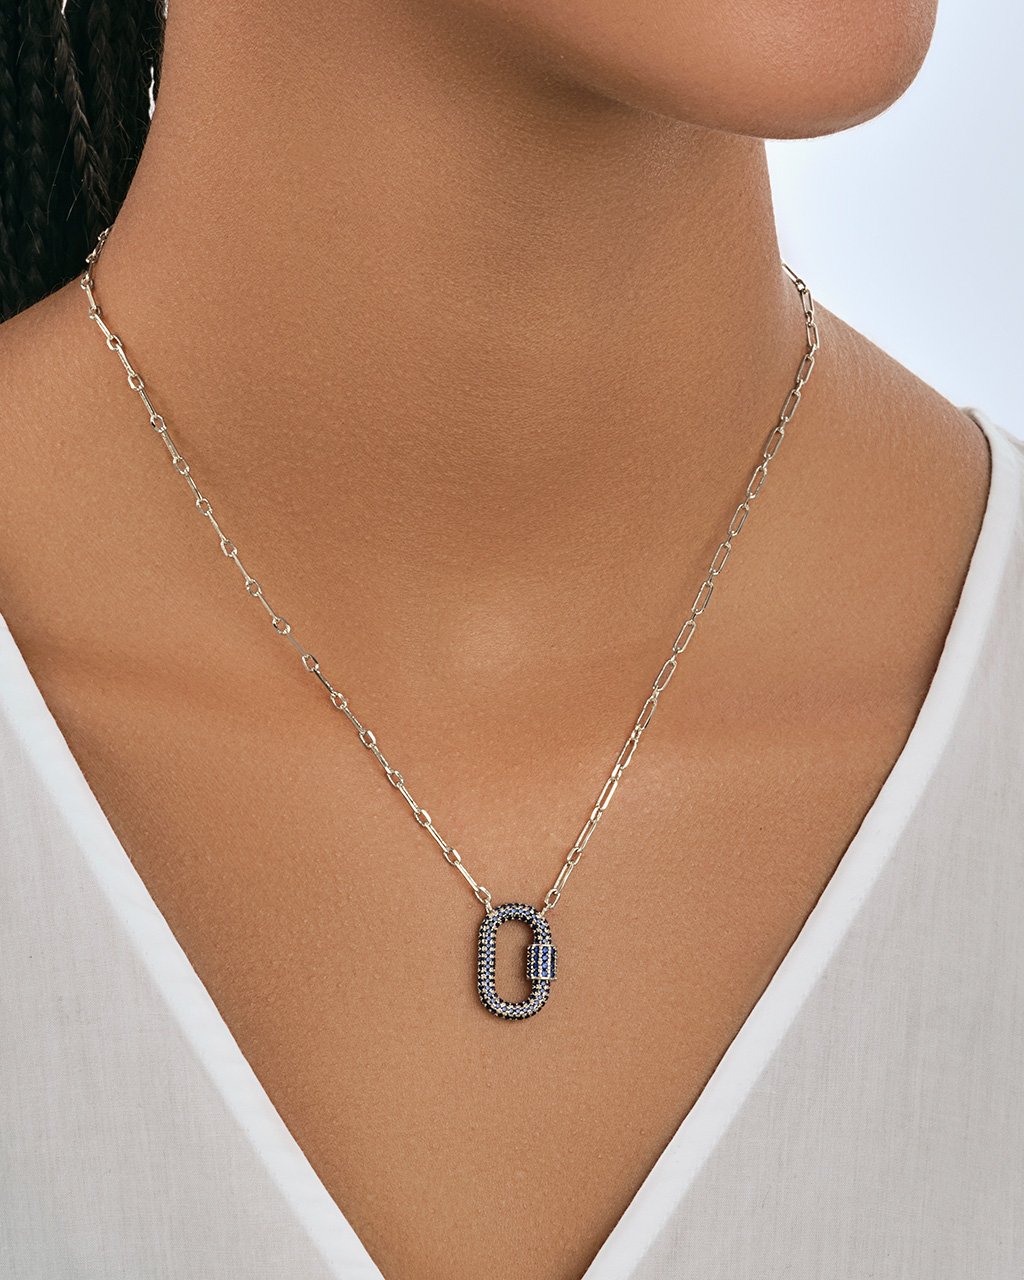 Pave CZ Carabiner Lock Necklace Necklace Sterling Forever 